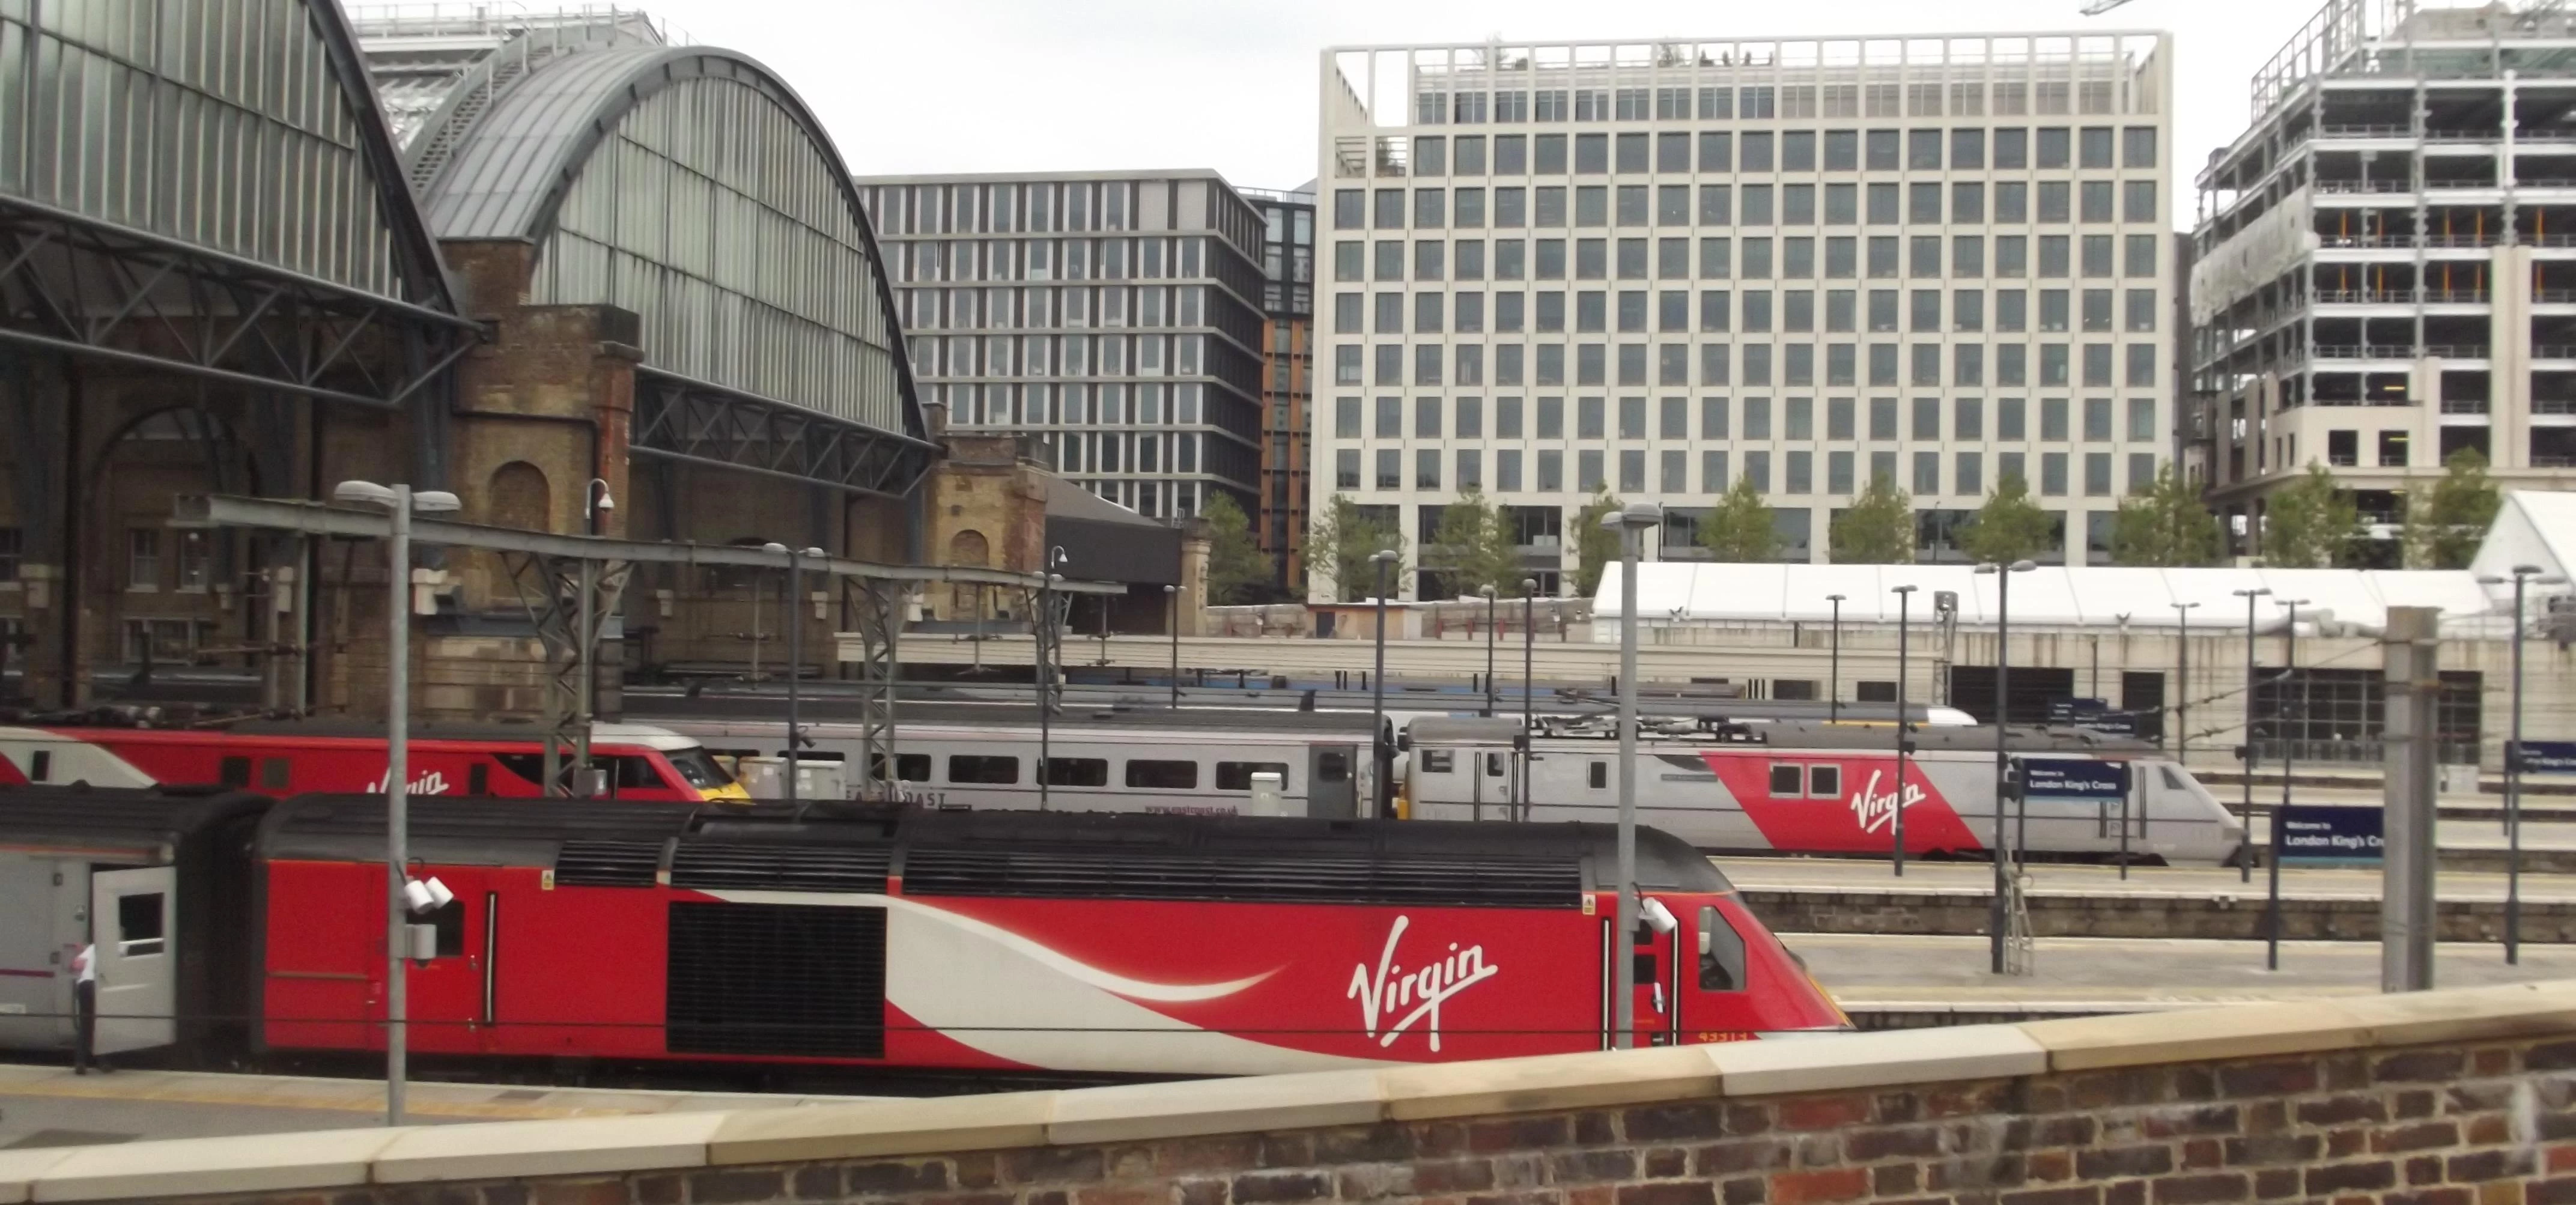 London King's Cross Station - Virgin Trains East Coast